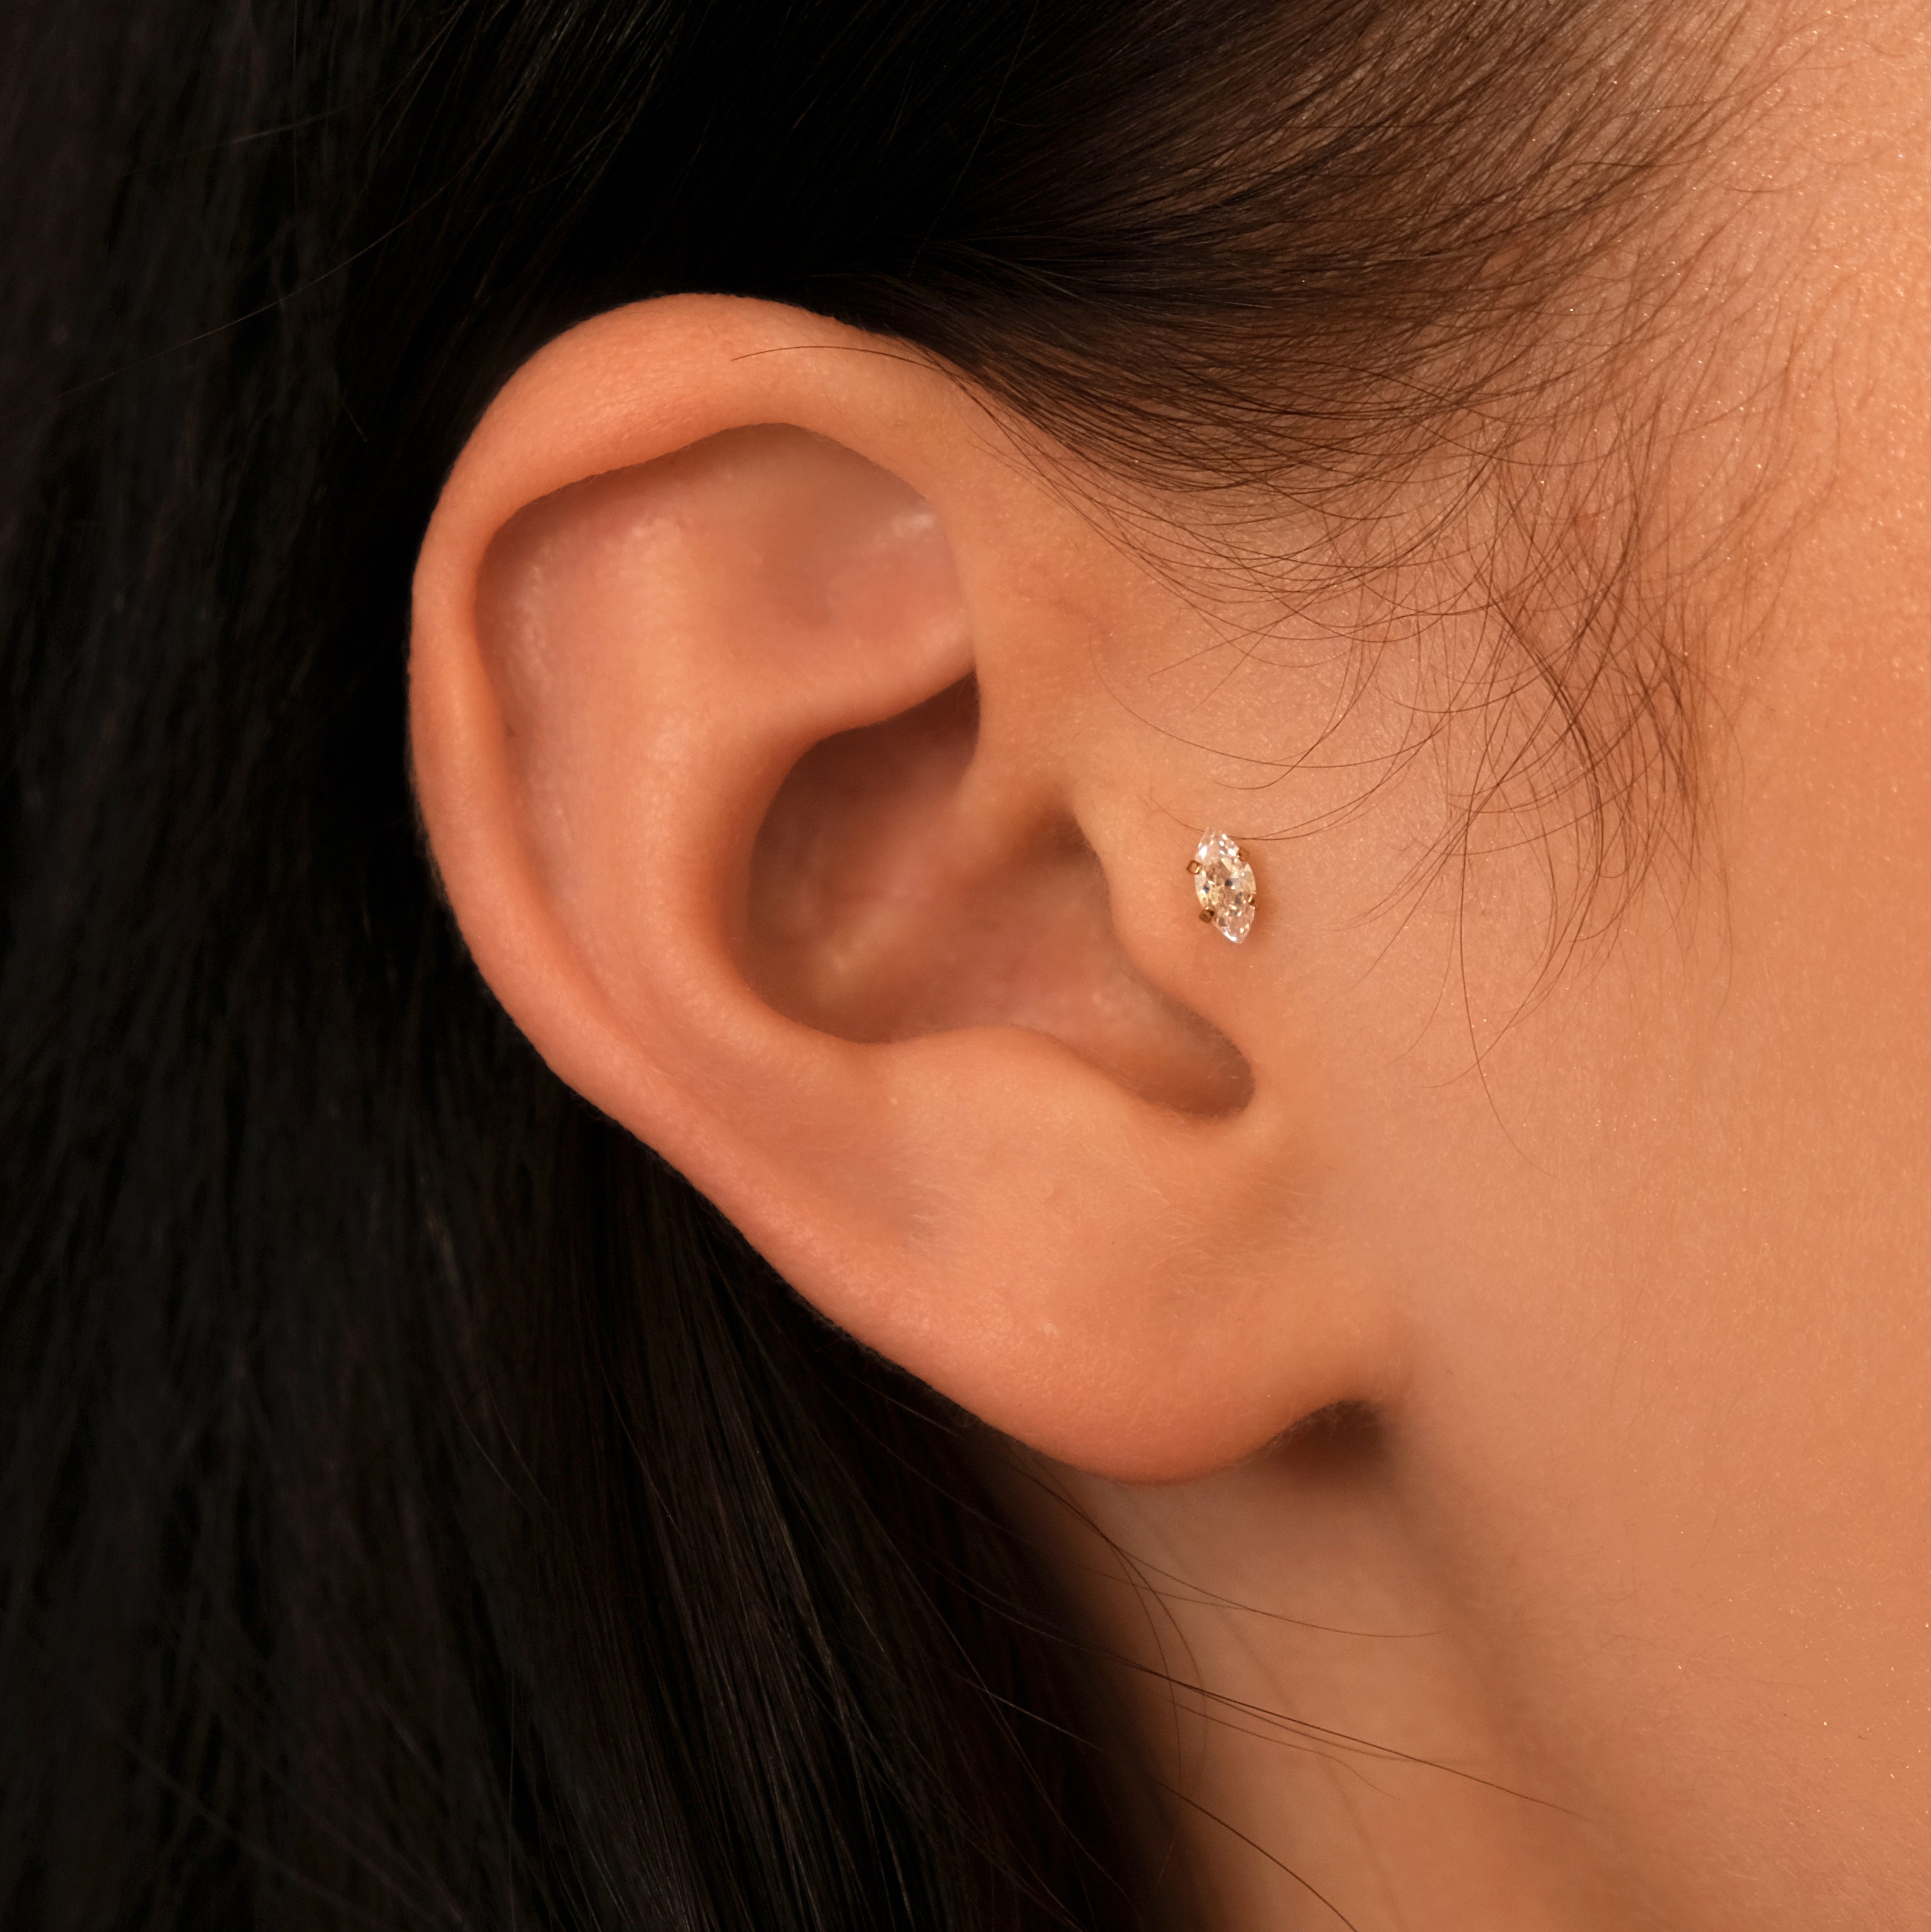 Icing Select Gold Titanium 2mm Ball Flat Back Stud Earrings